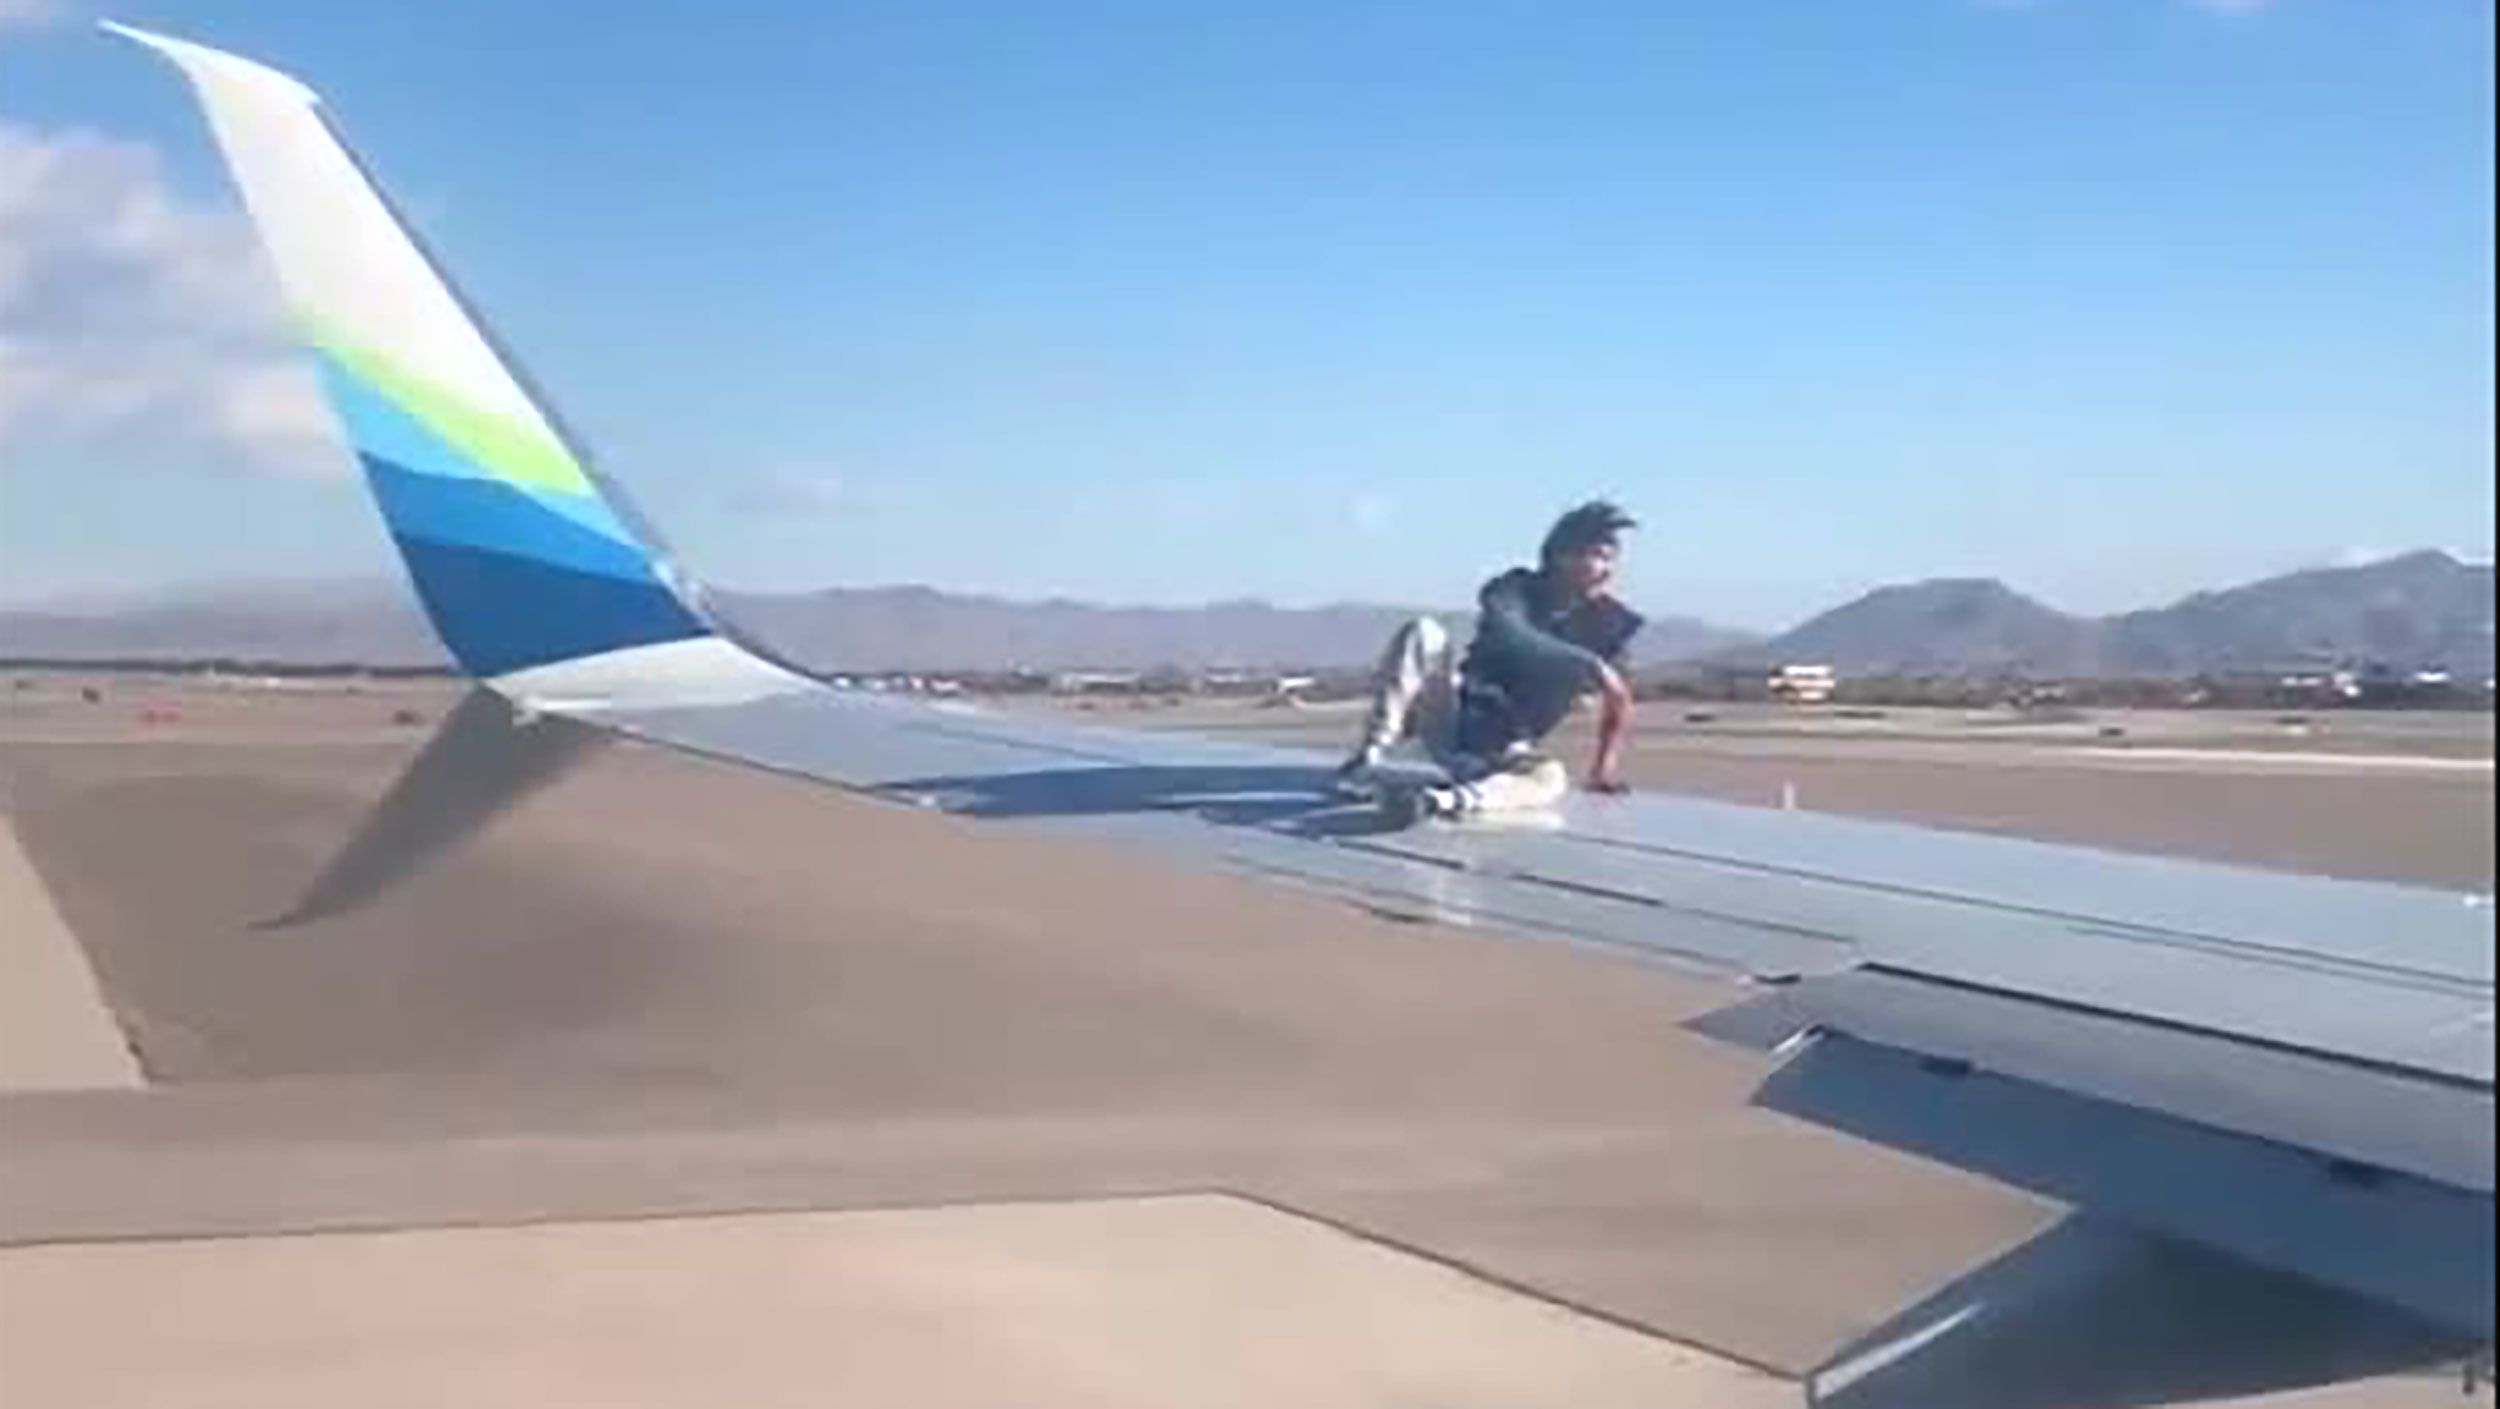 Las Vegas airport: Man taken into custody after he climbed onto